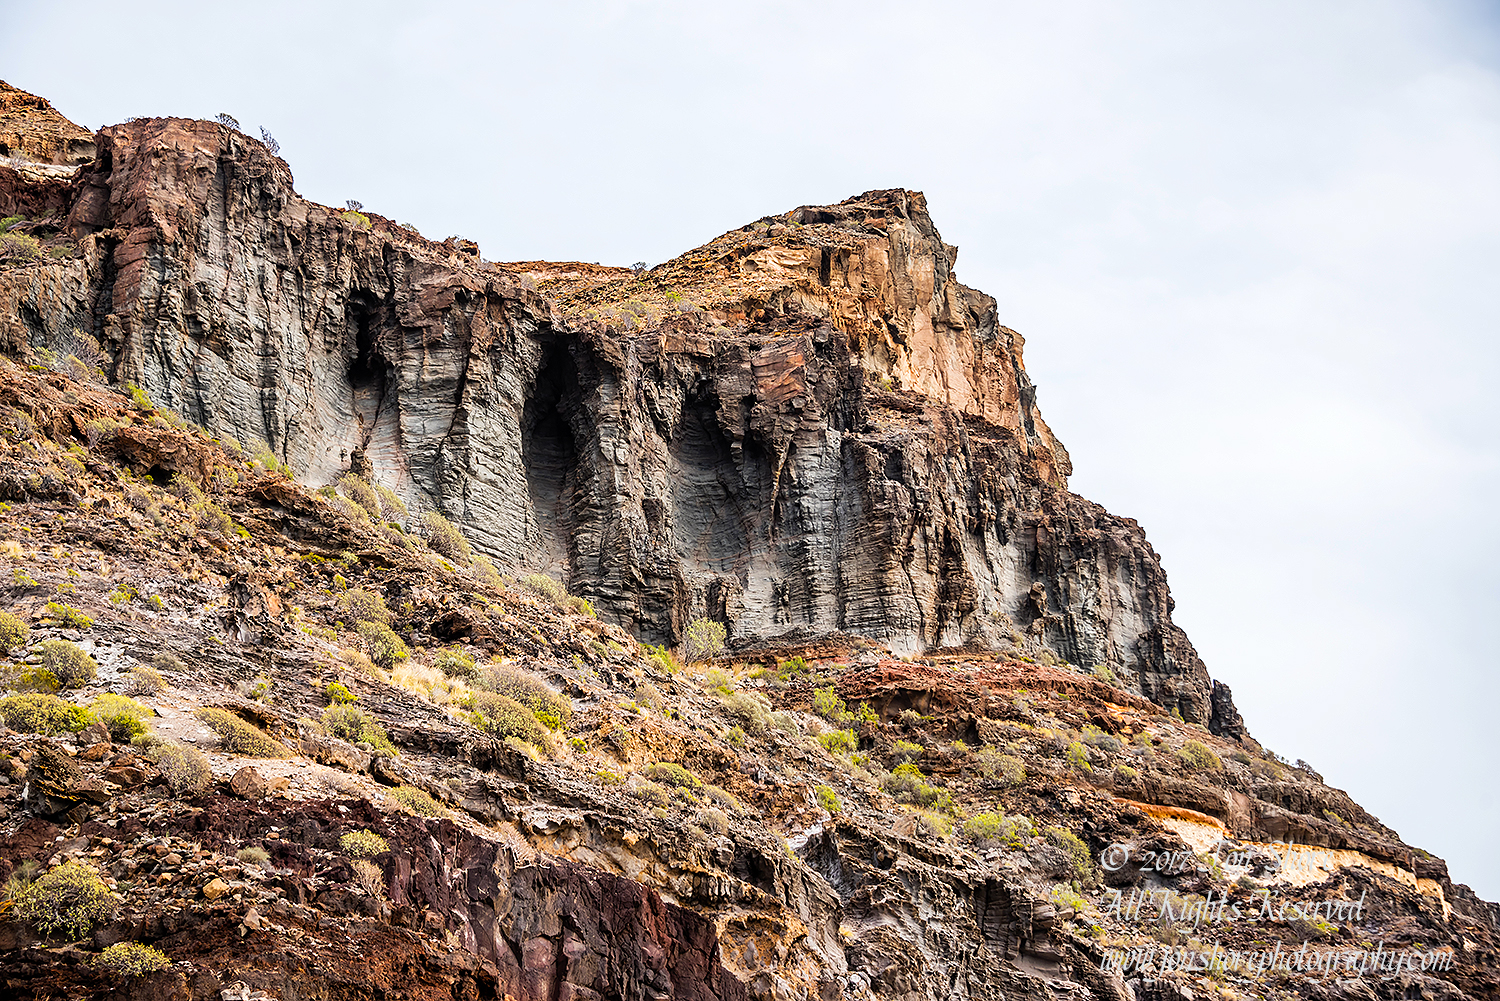 Volcanic Geological Feature. Playa de Tasarte, Gran Canaria. Nikkor 300mm